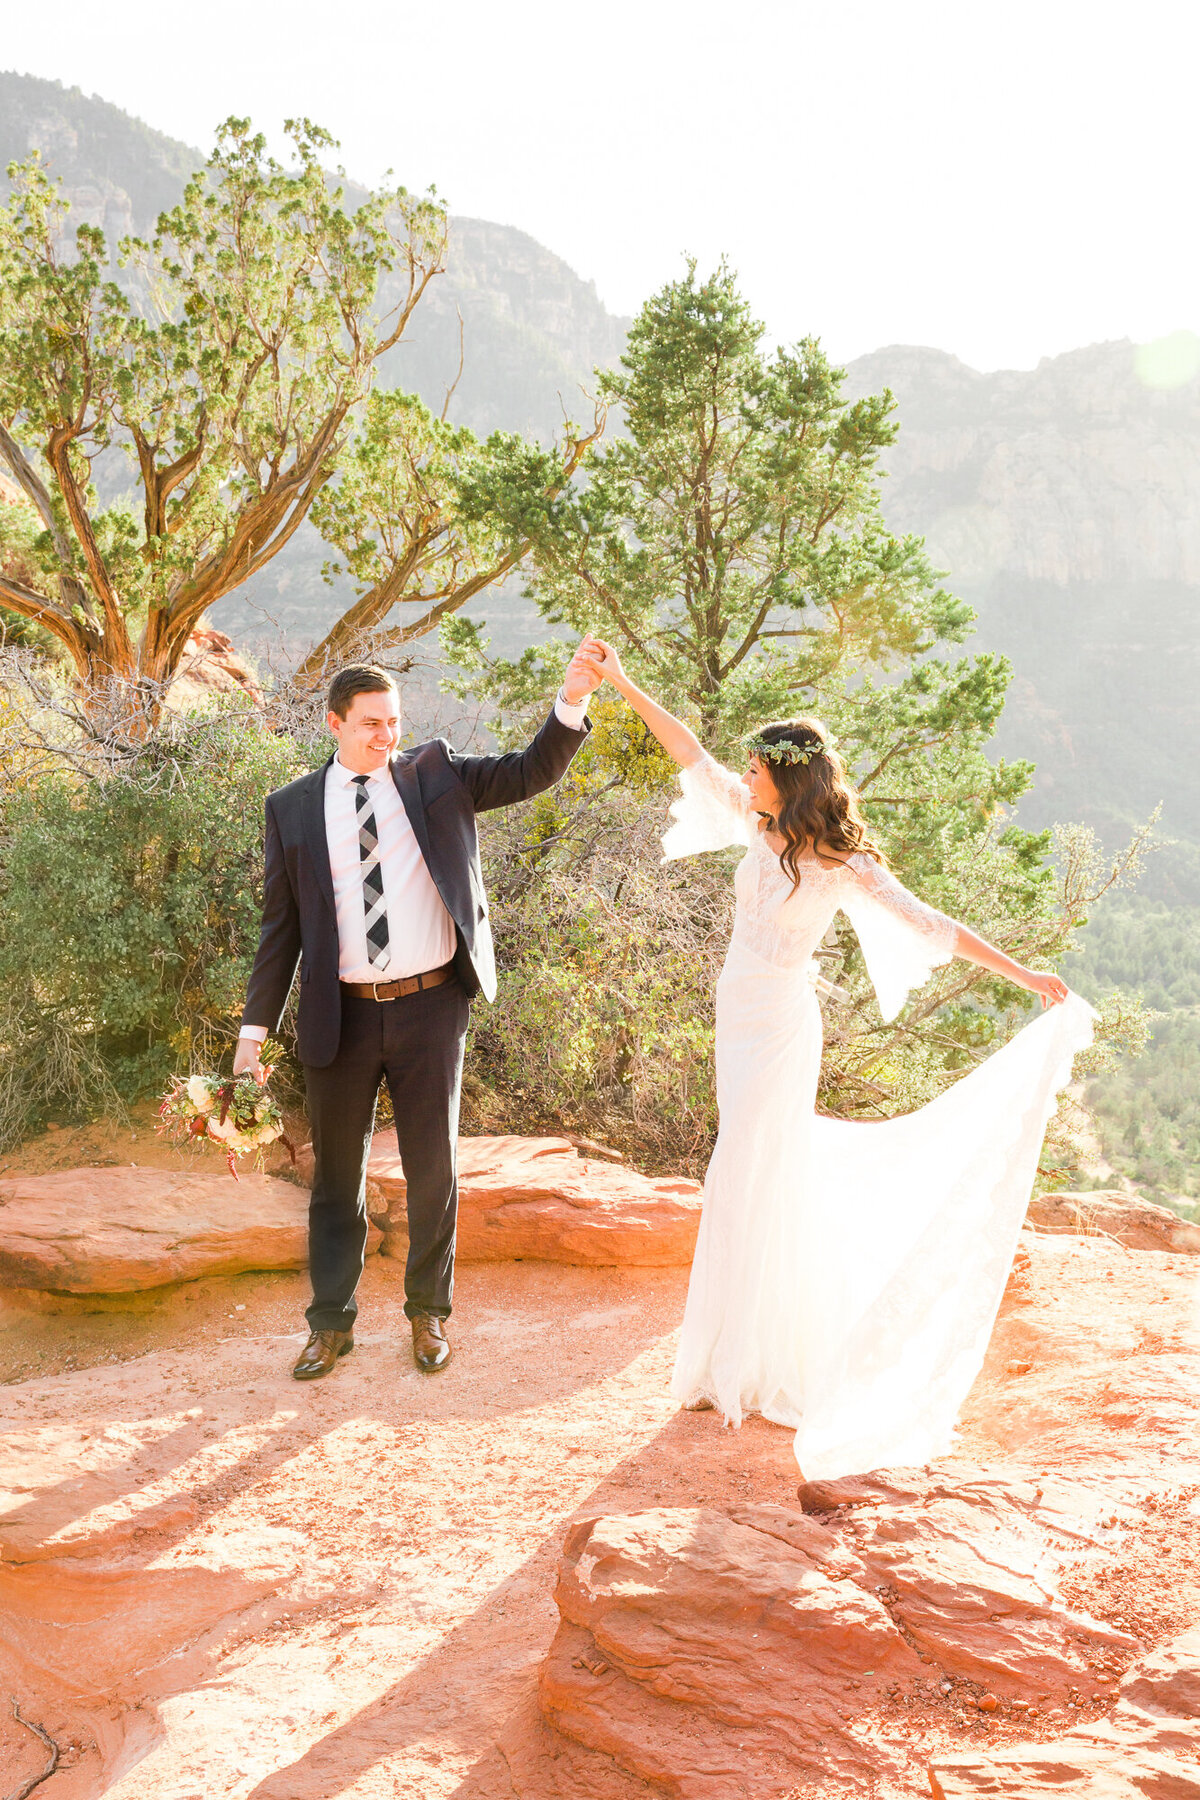 Wedding Couple's Portrait Photography - Sedona, Arizona - Bayley Jordan Photography